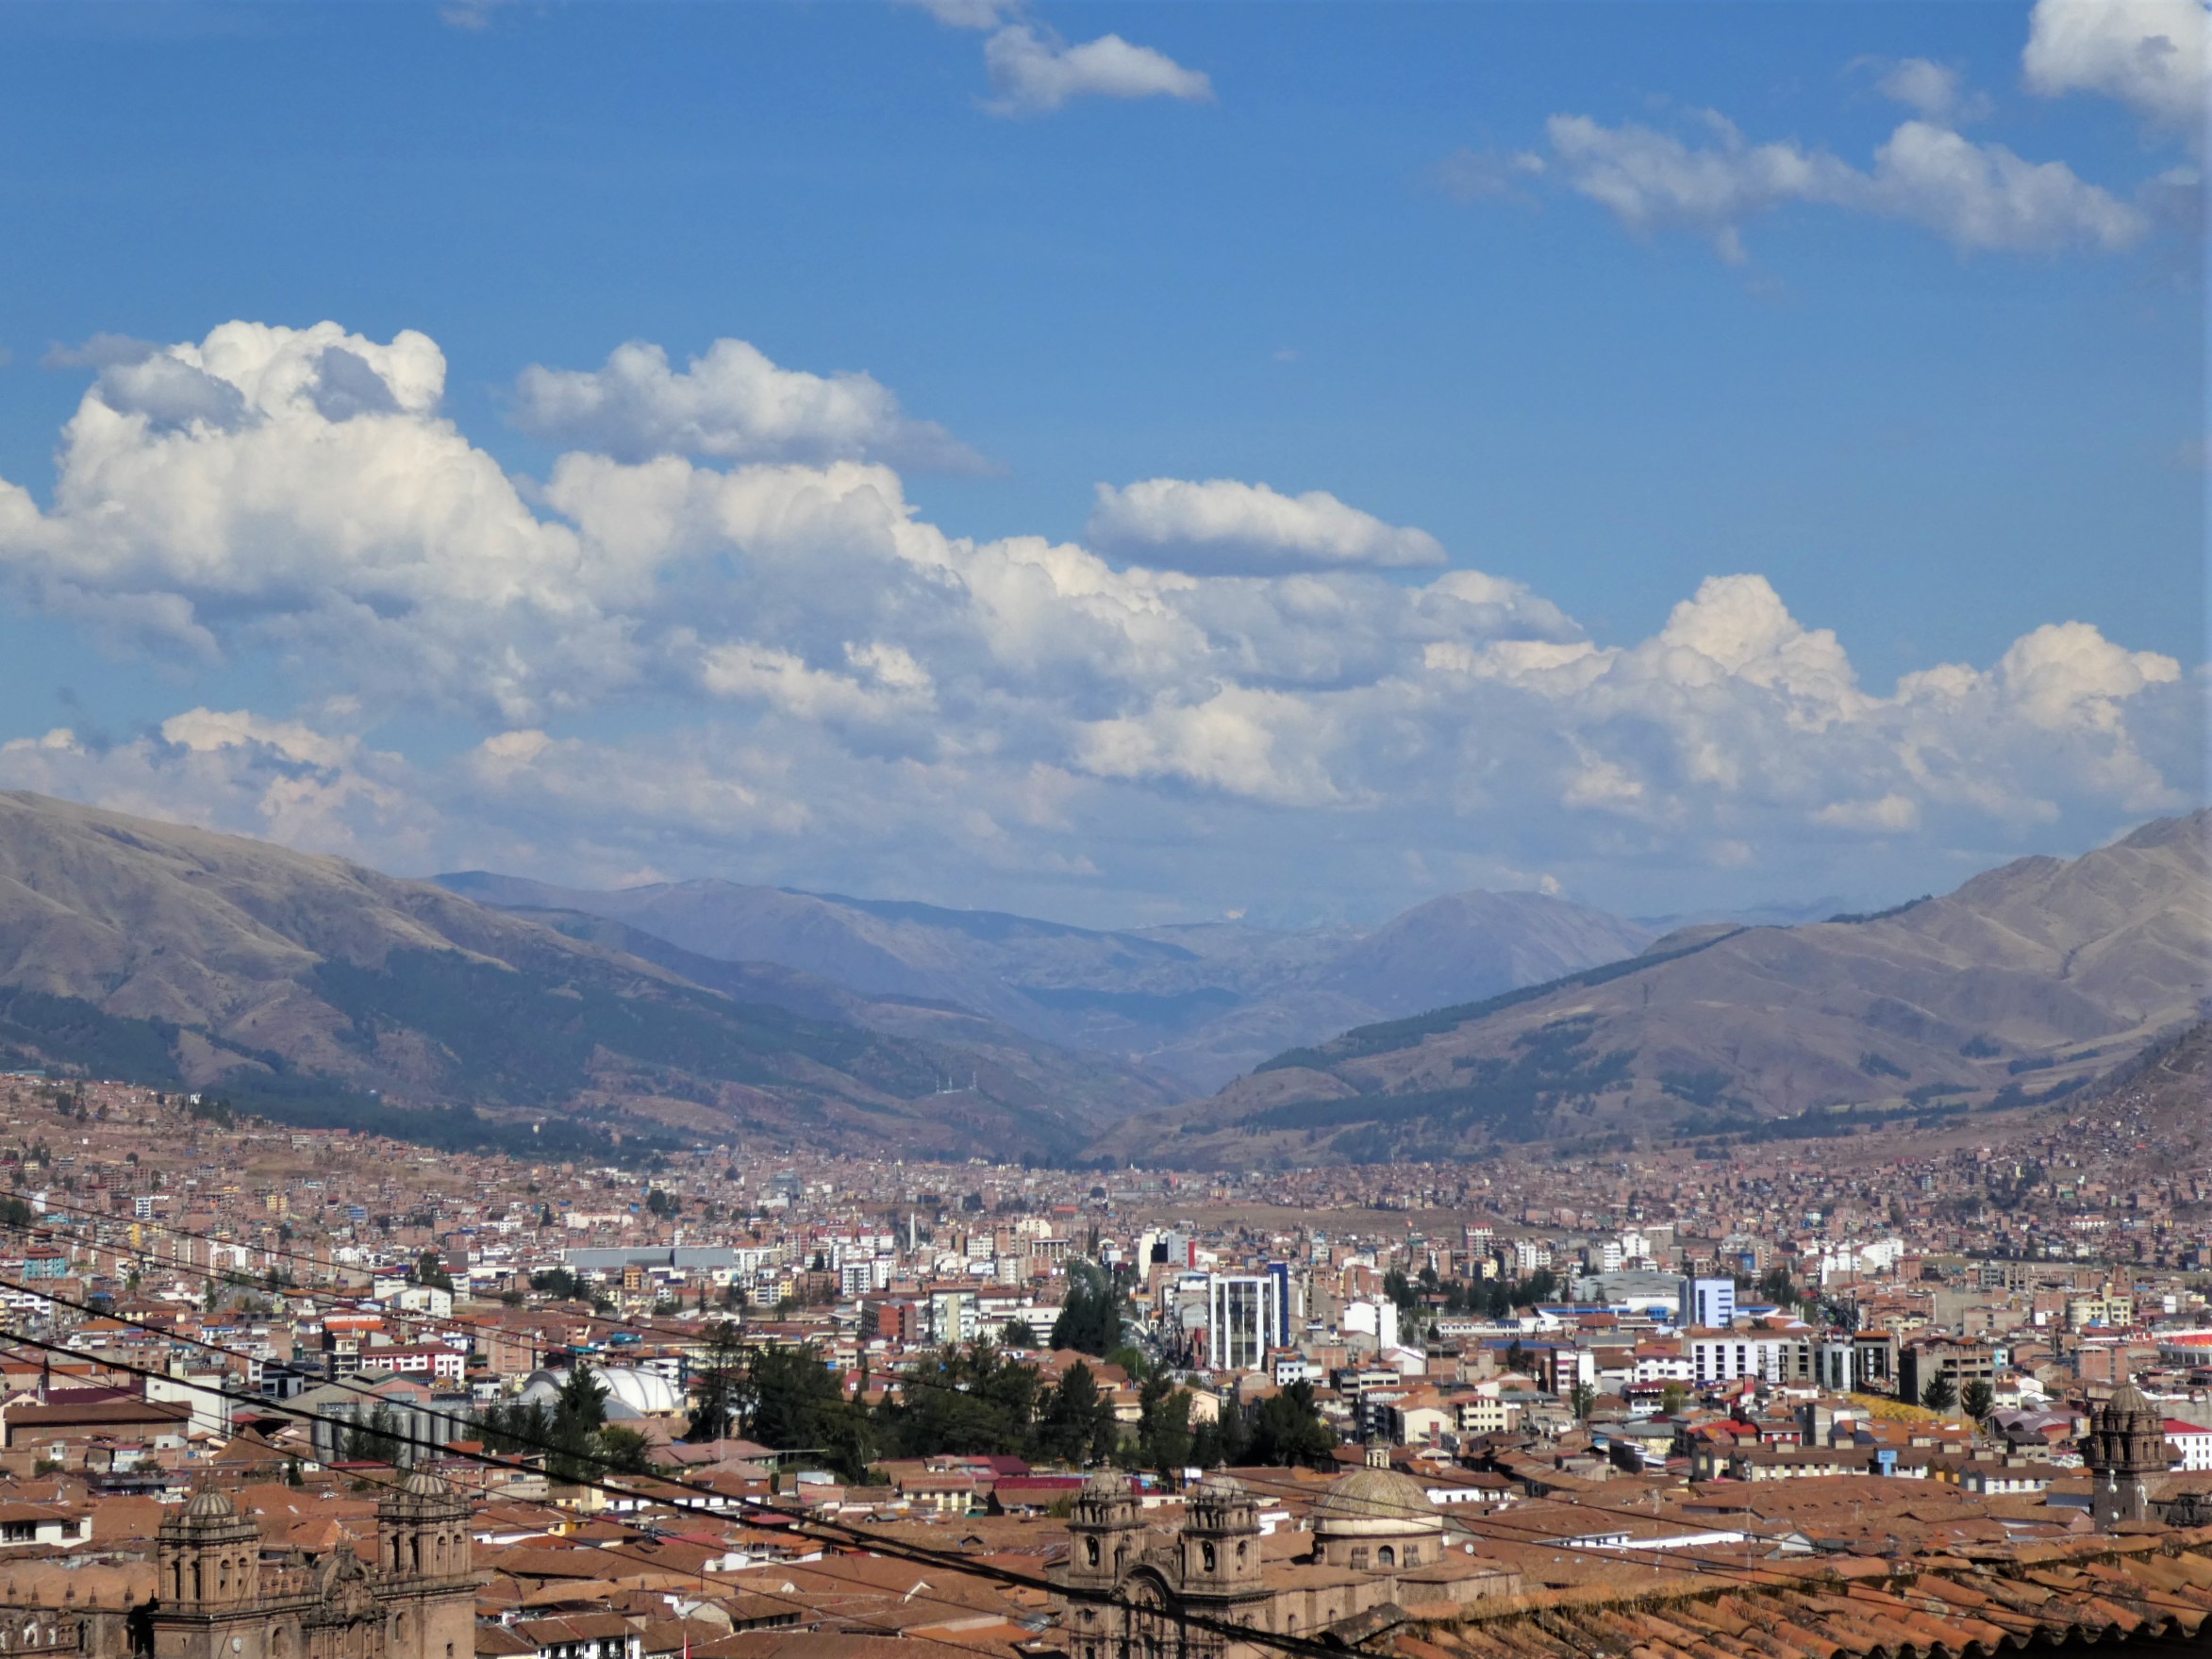 View from Arco de Santa Ana in Cusco